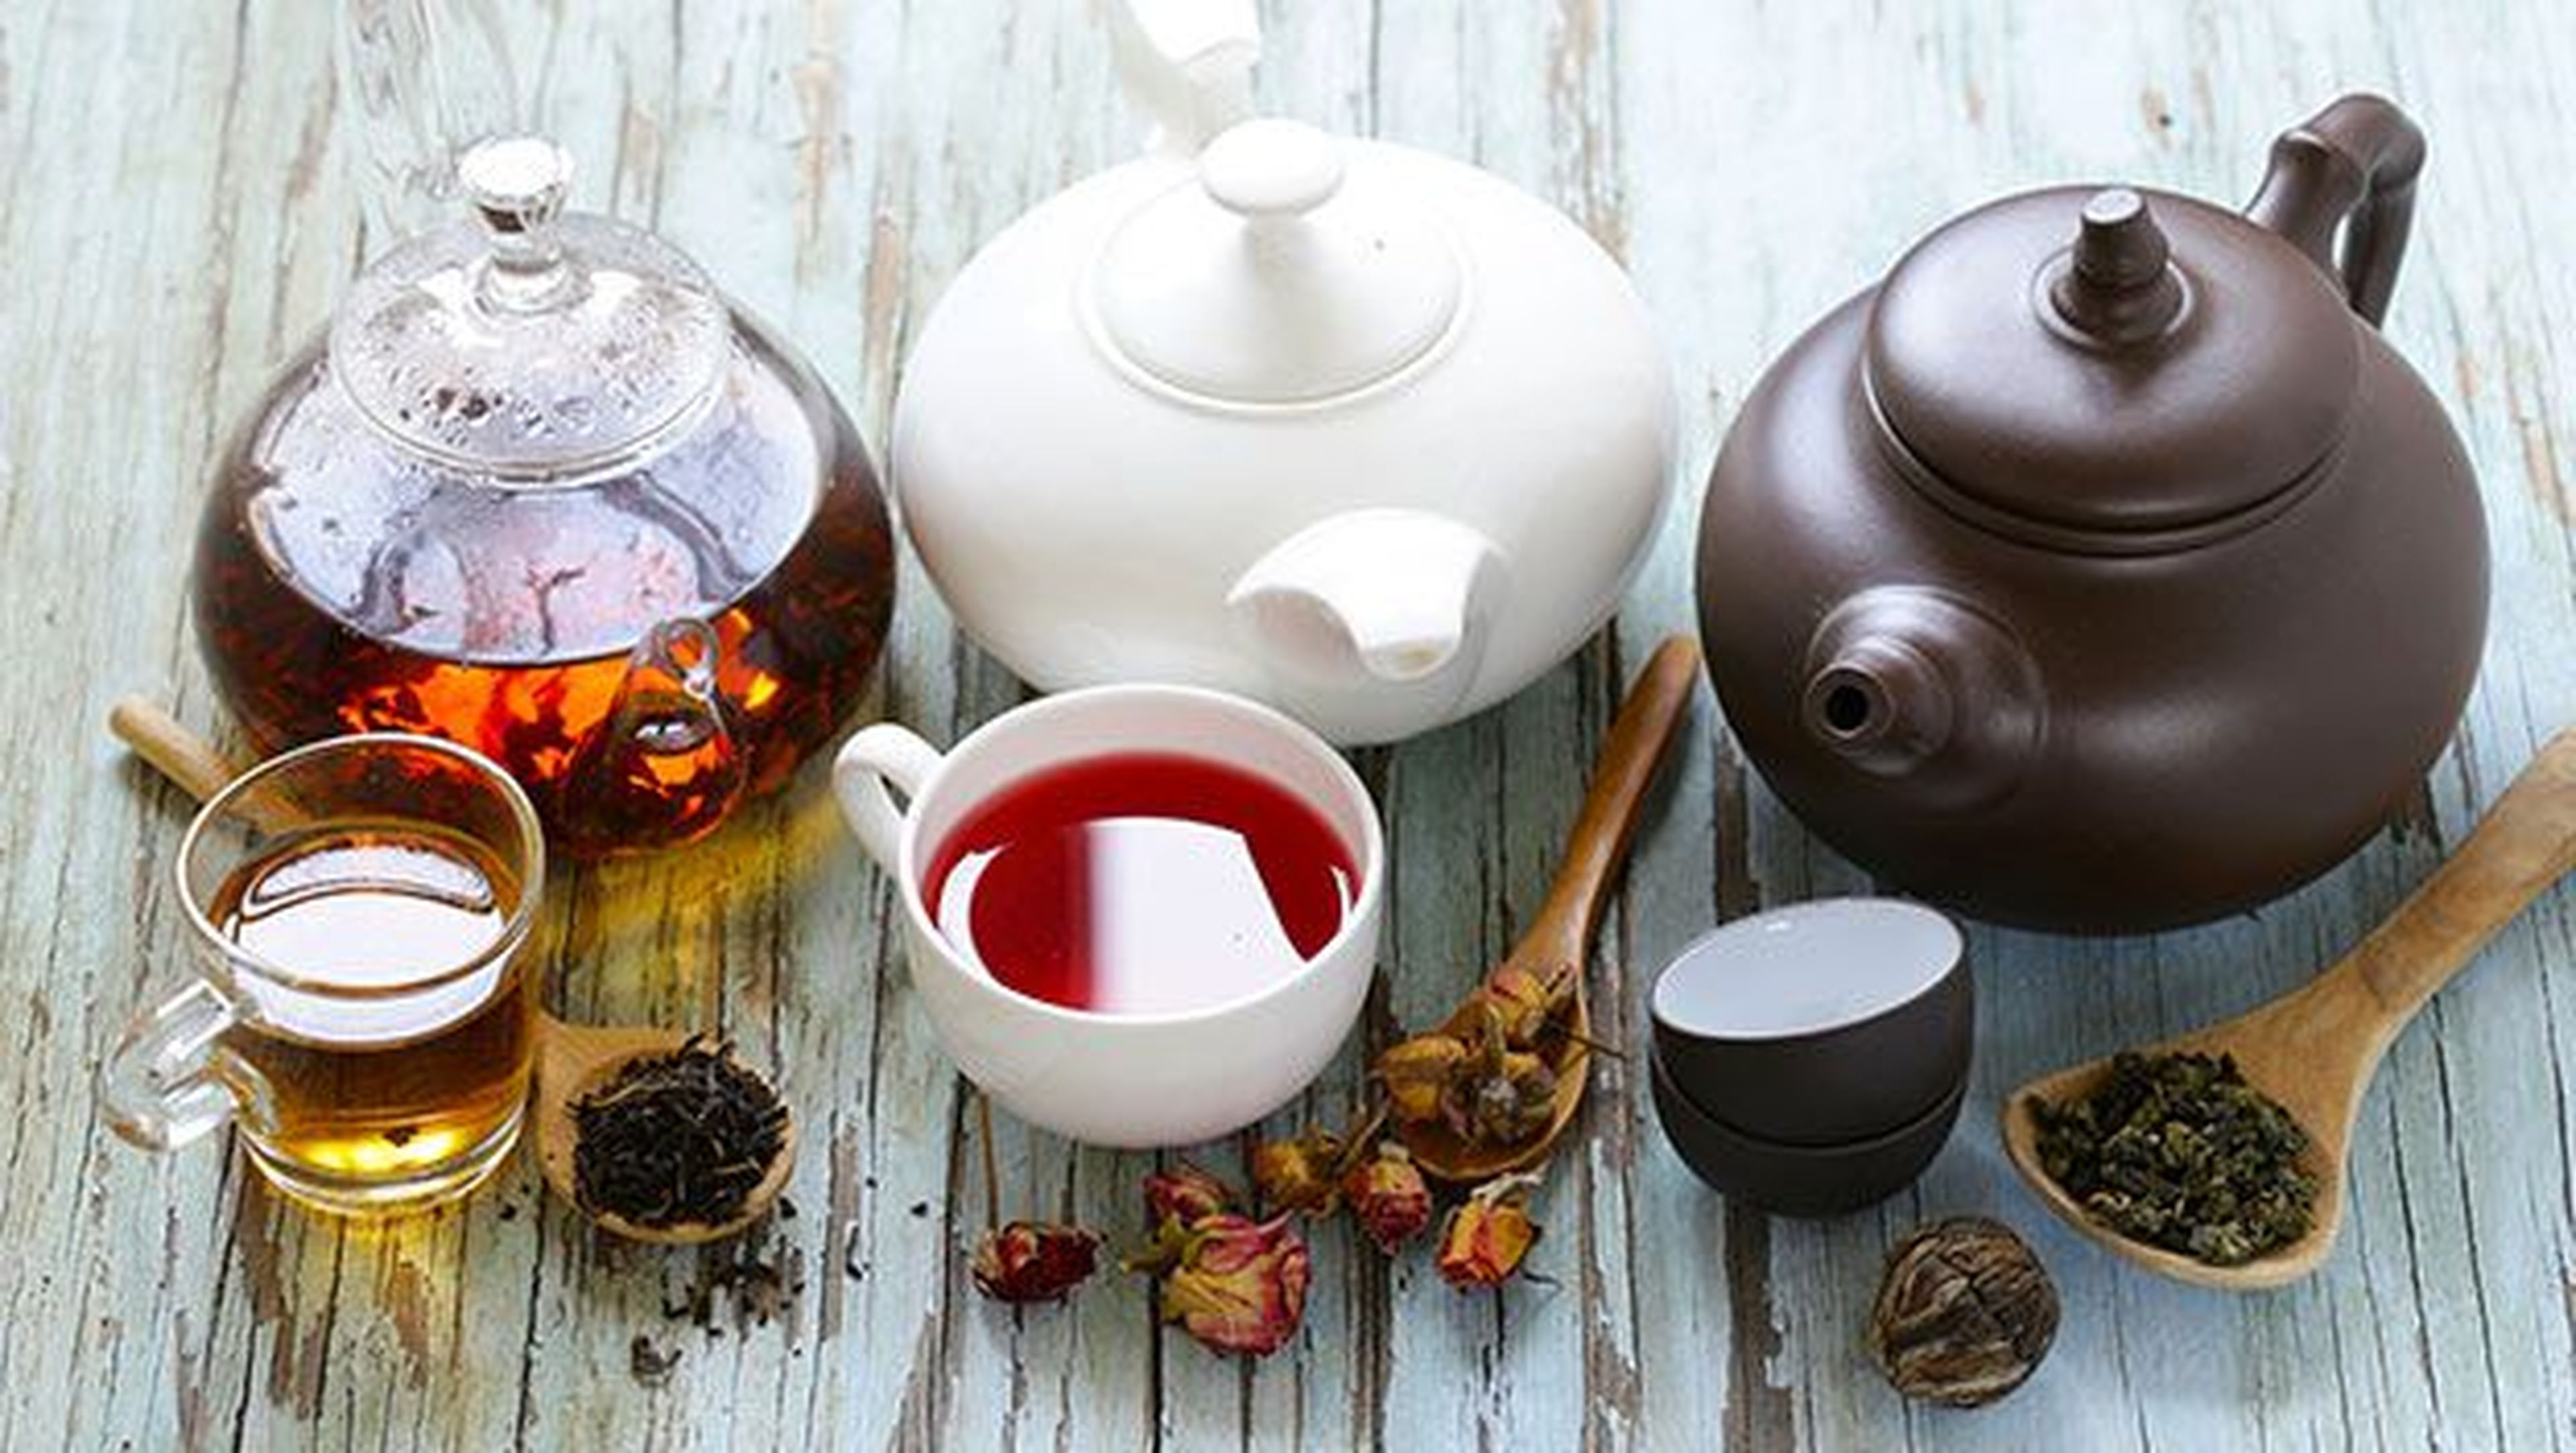 Вкусный чай попью чай. Чай. Чай в чайнике. Заварка чая. Красивый чай в чайнике.